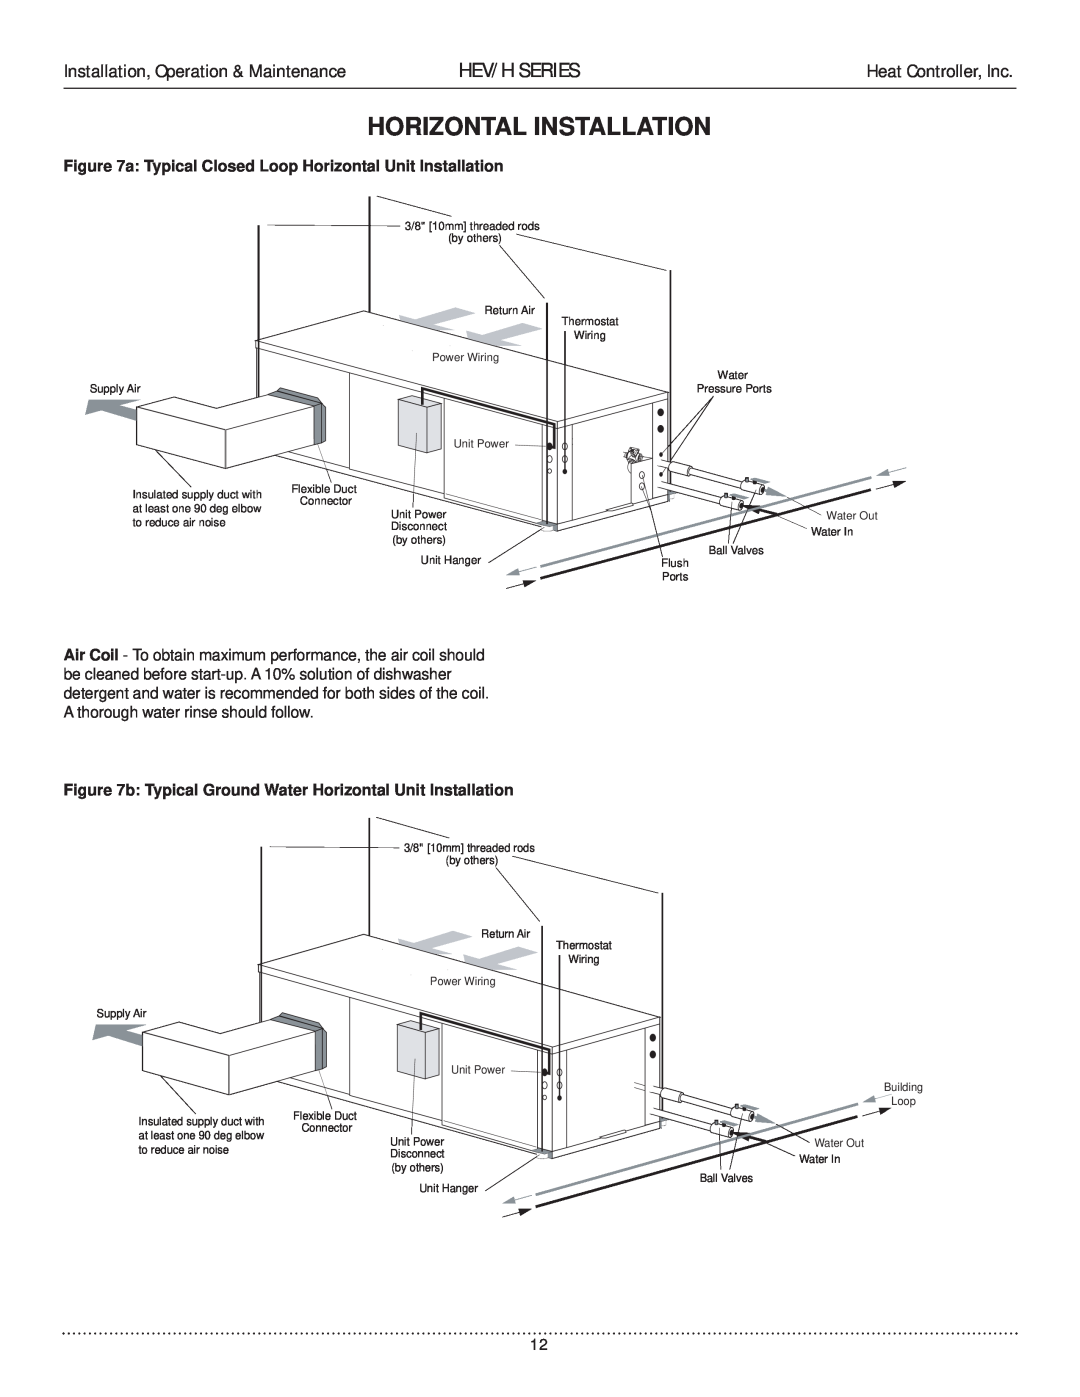 Heat Controller HEV/H Horizontal Installation, Hev/H Series, Installation, Operation & Maintenance, Heat Controller, Inc 